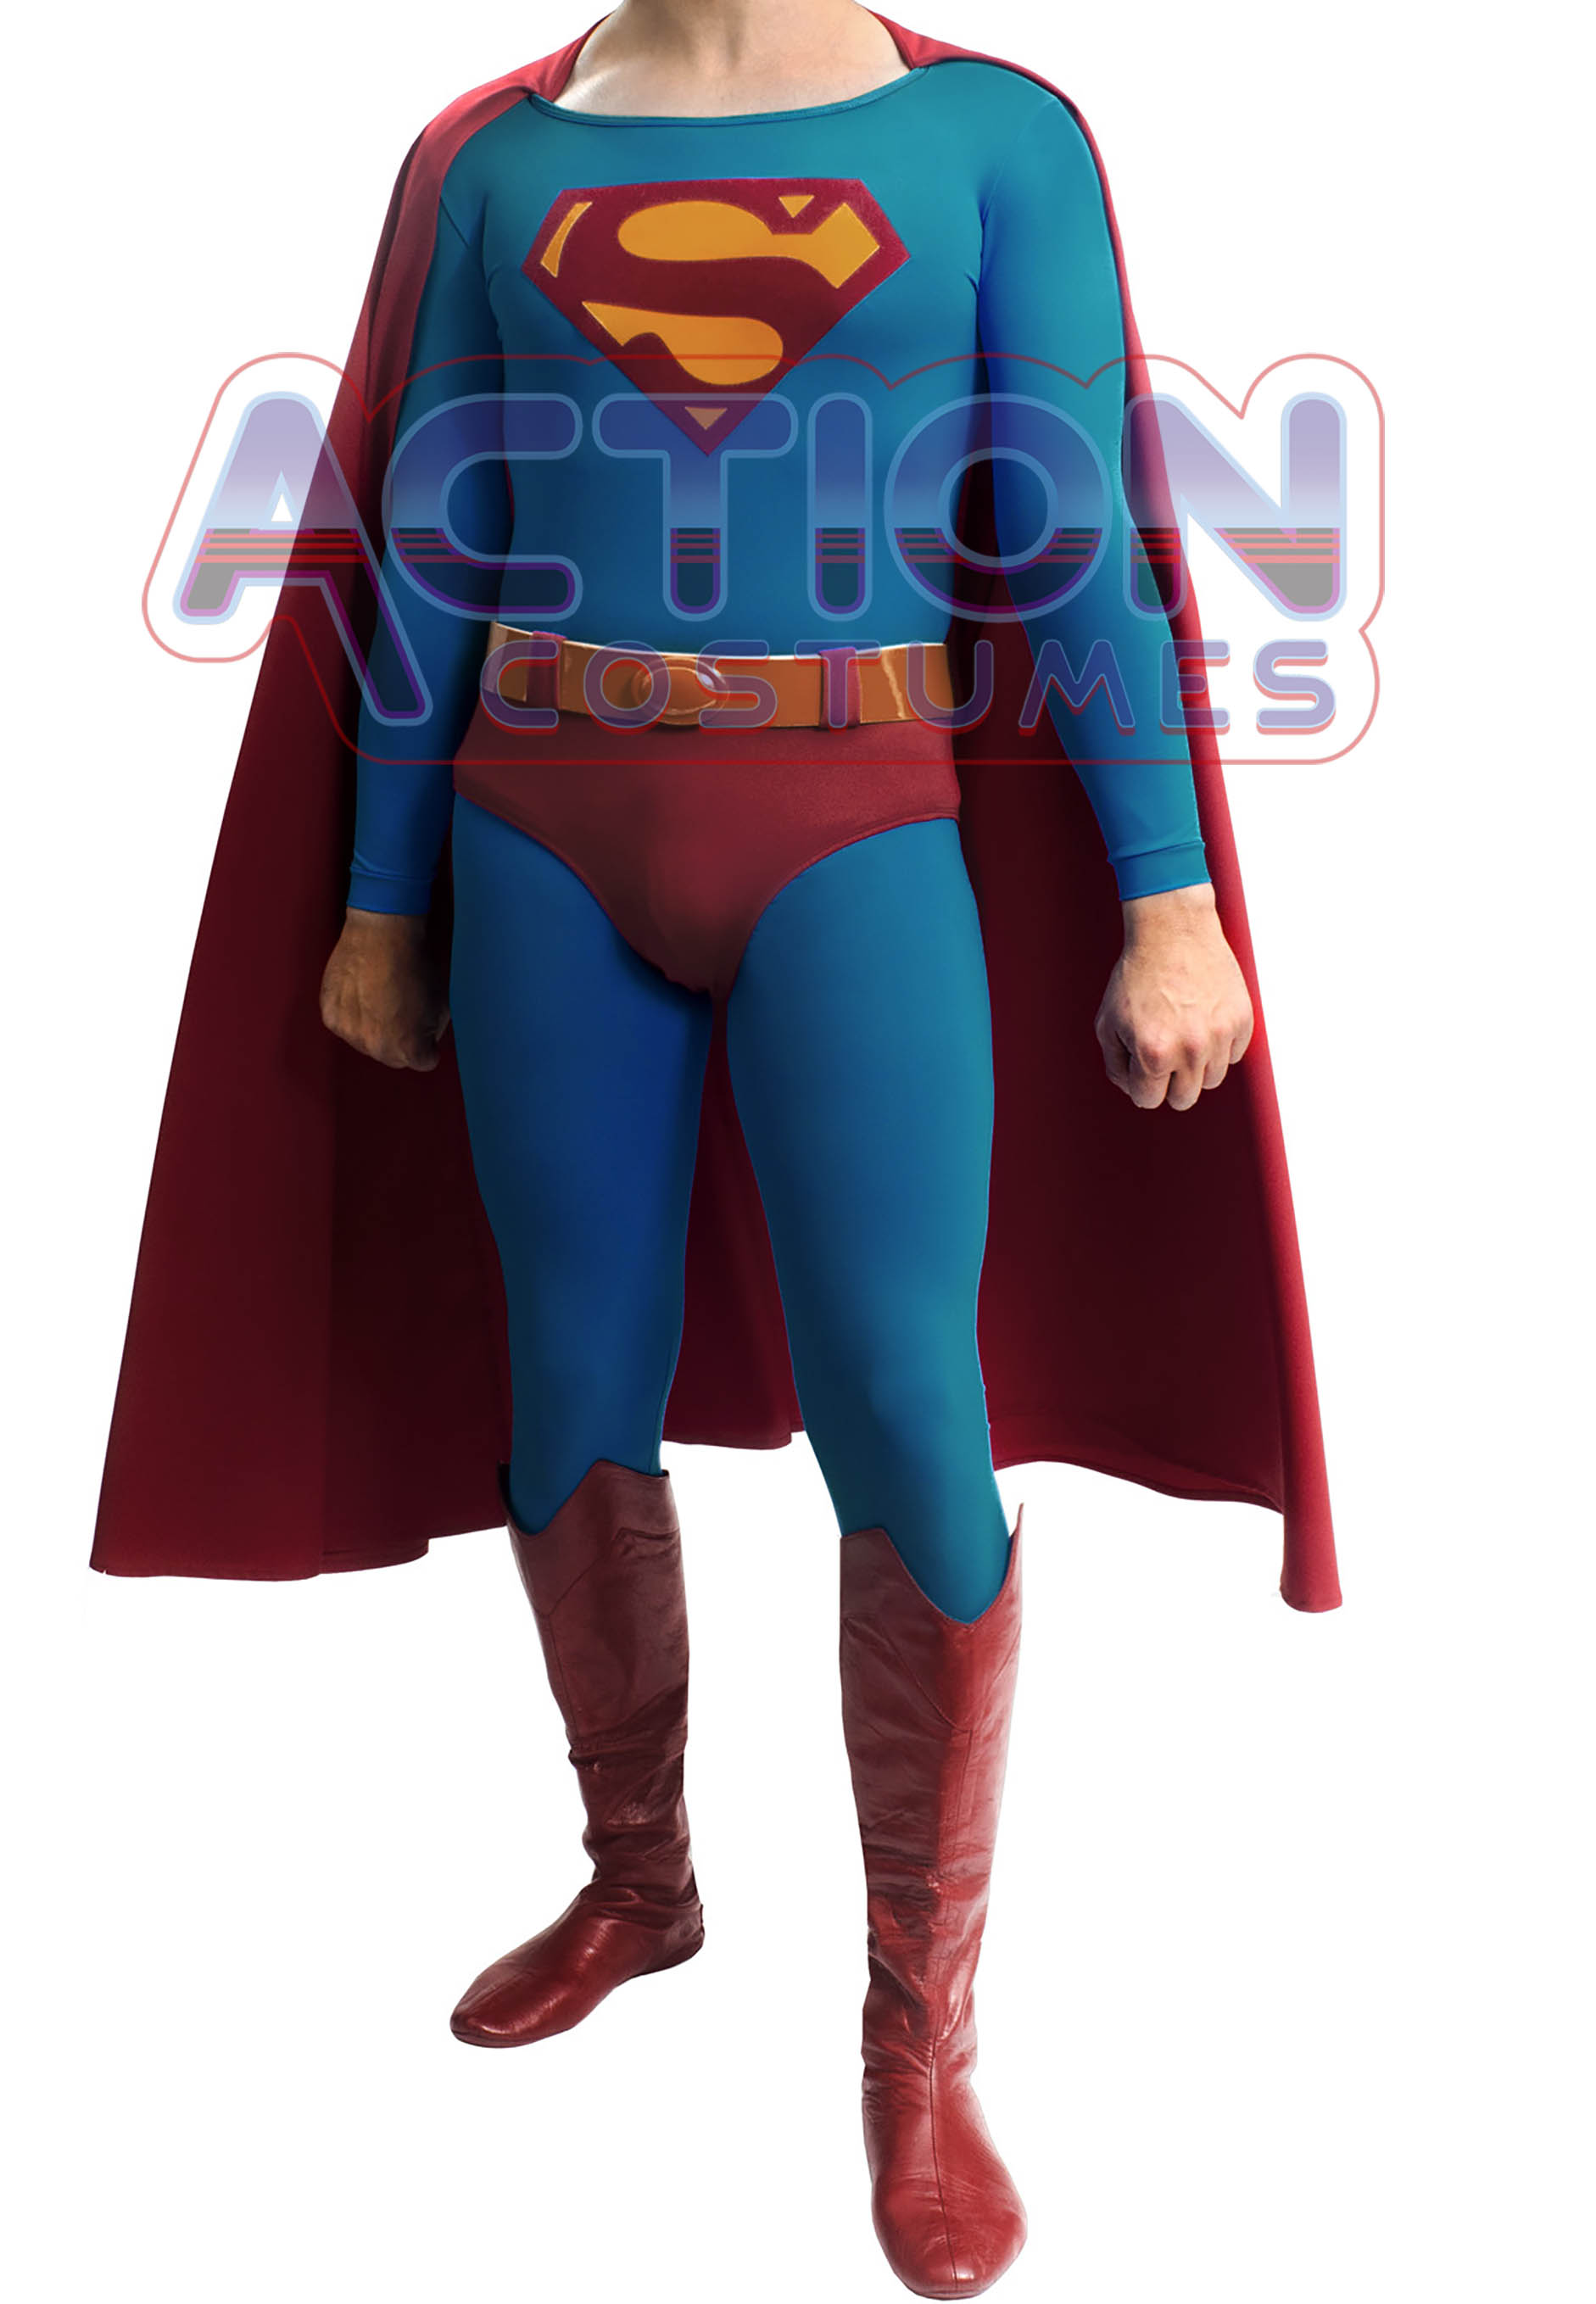 superman-evil-costume-80s-style